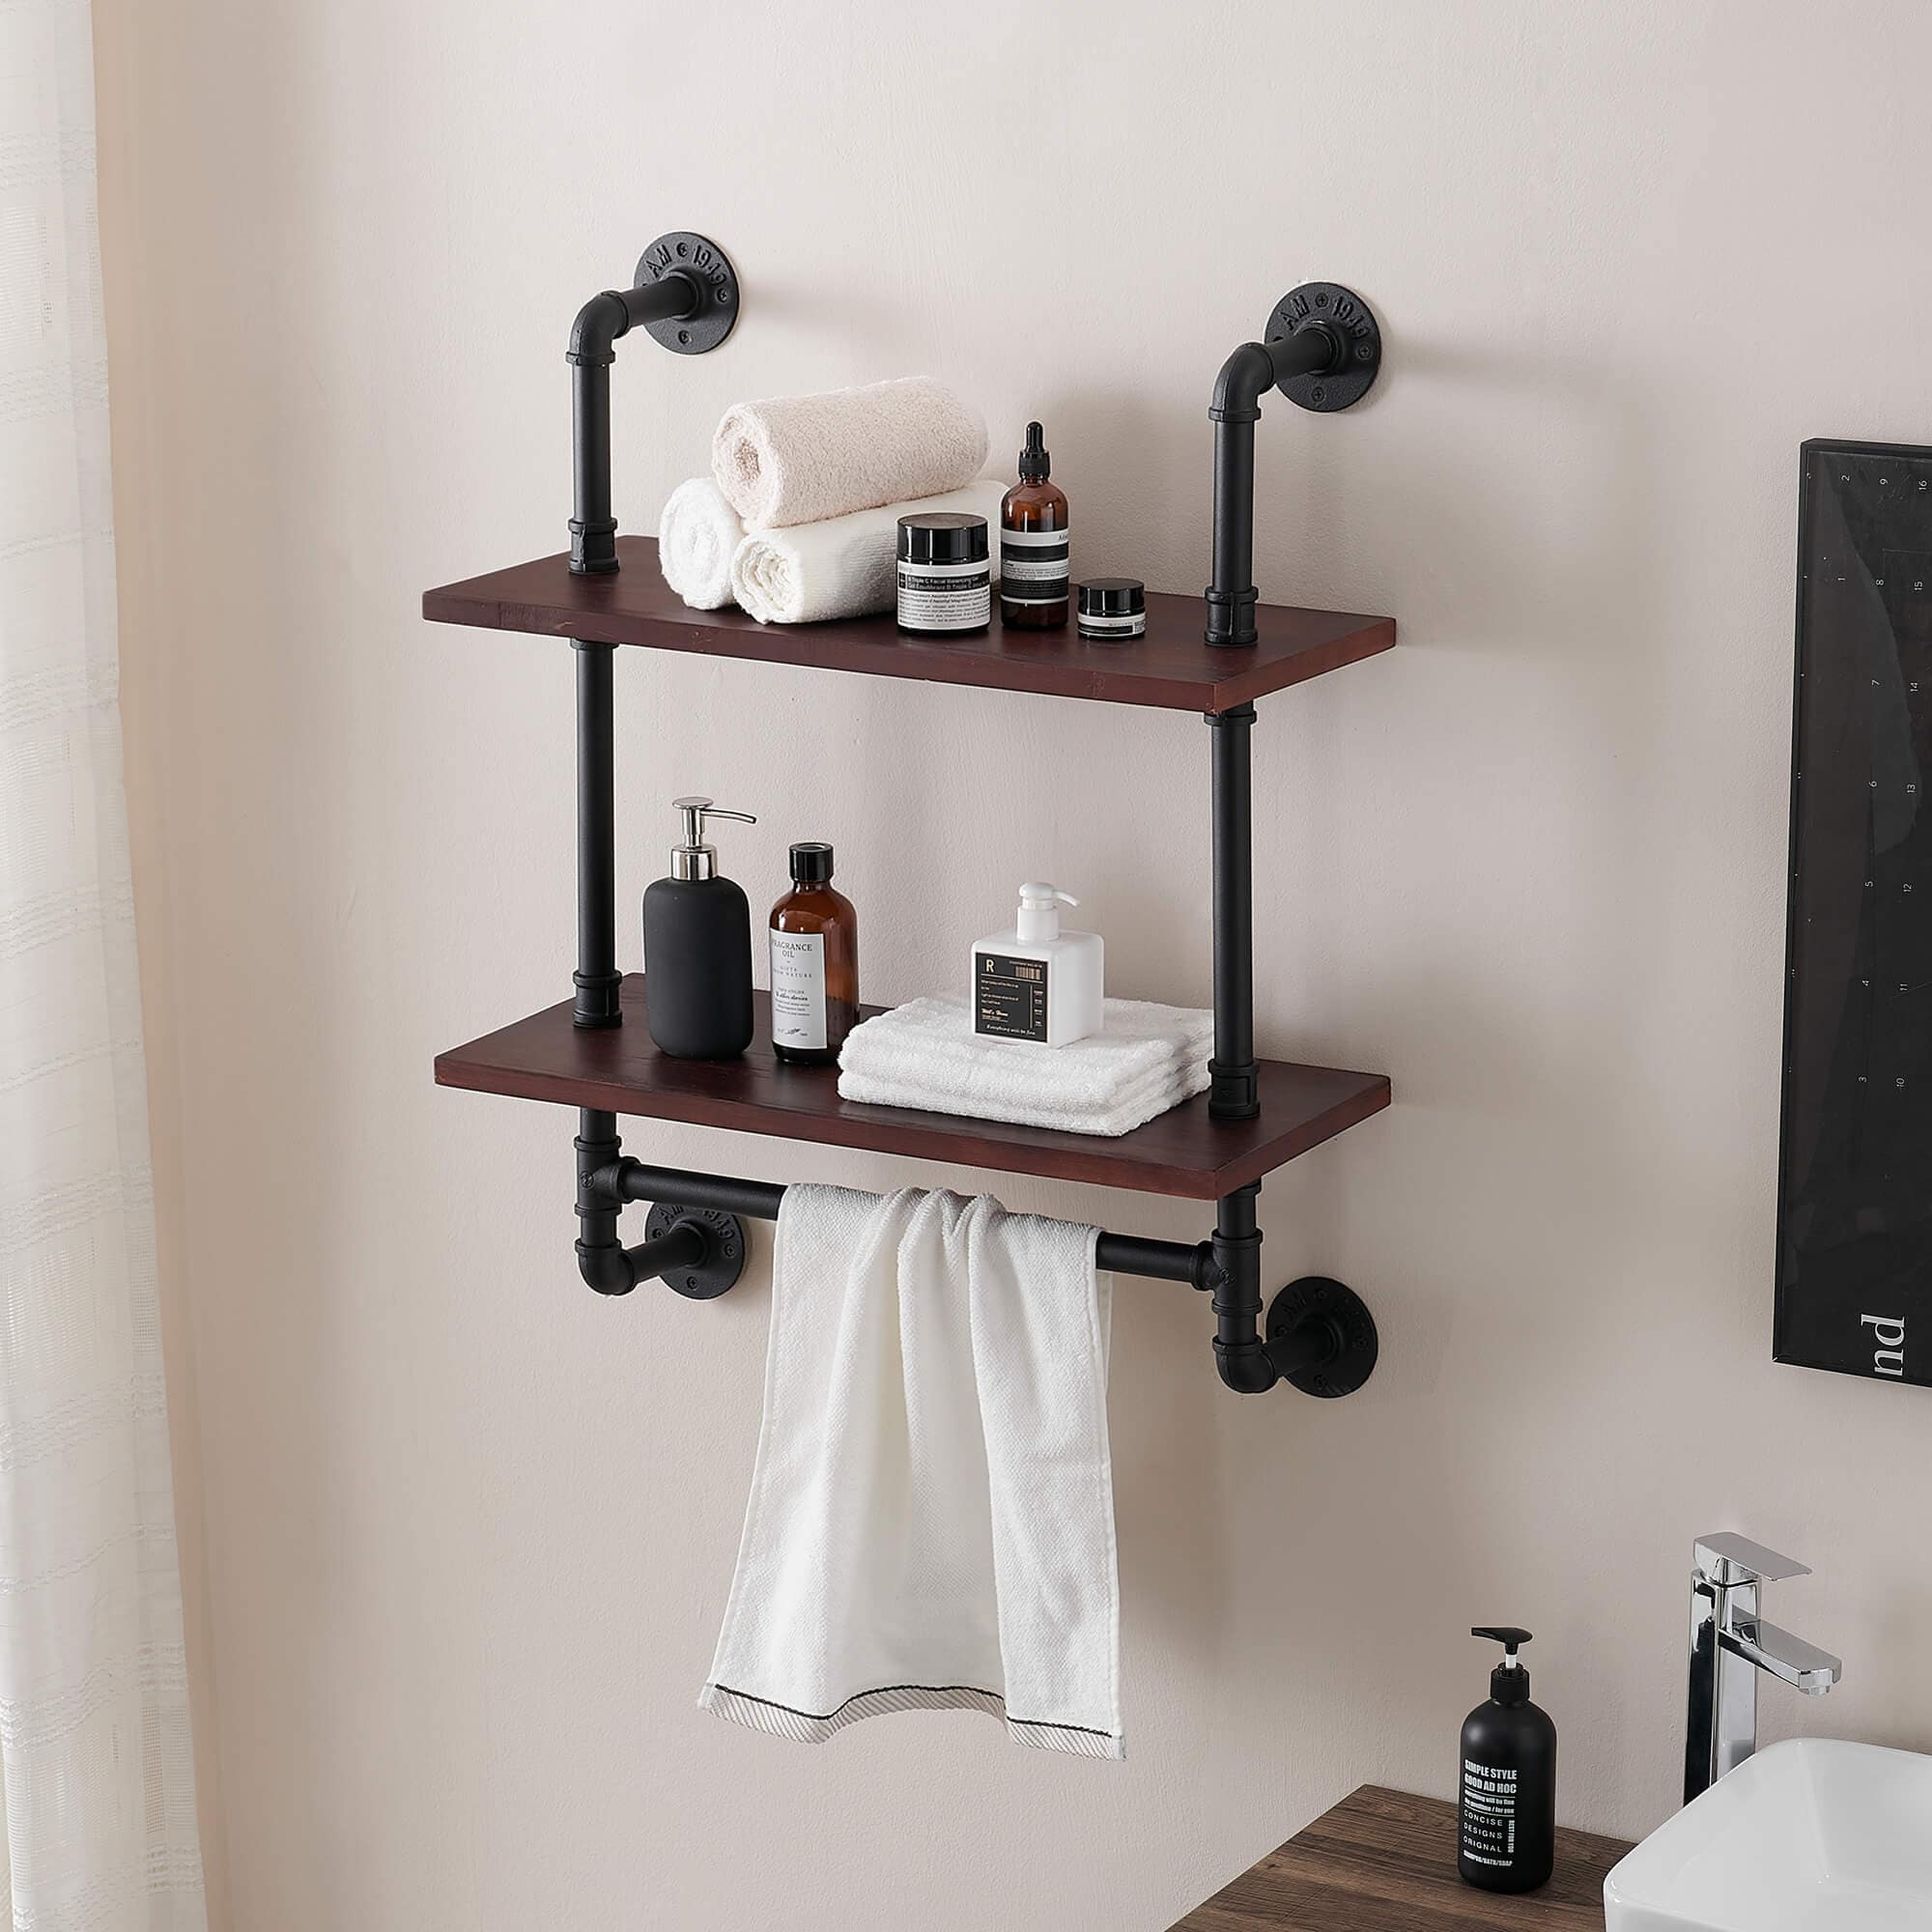 https://ak1.ostkcdn.com/images/products/is/images/direct/ca4b97532391eec58724dc71298c9dc5b39dc5b5/ivinta-Towel-Racks%2C-Industrial-Floating-Shelves%2C-Wall-Shelf-for-Bathroom.jpg